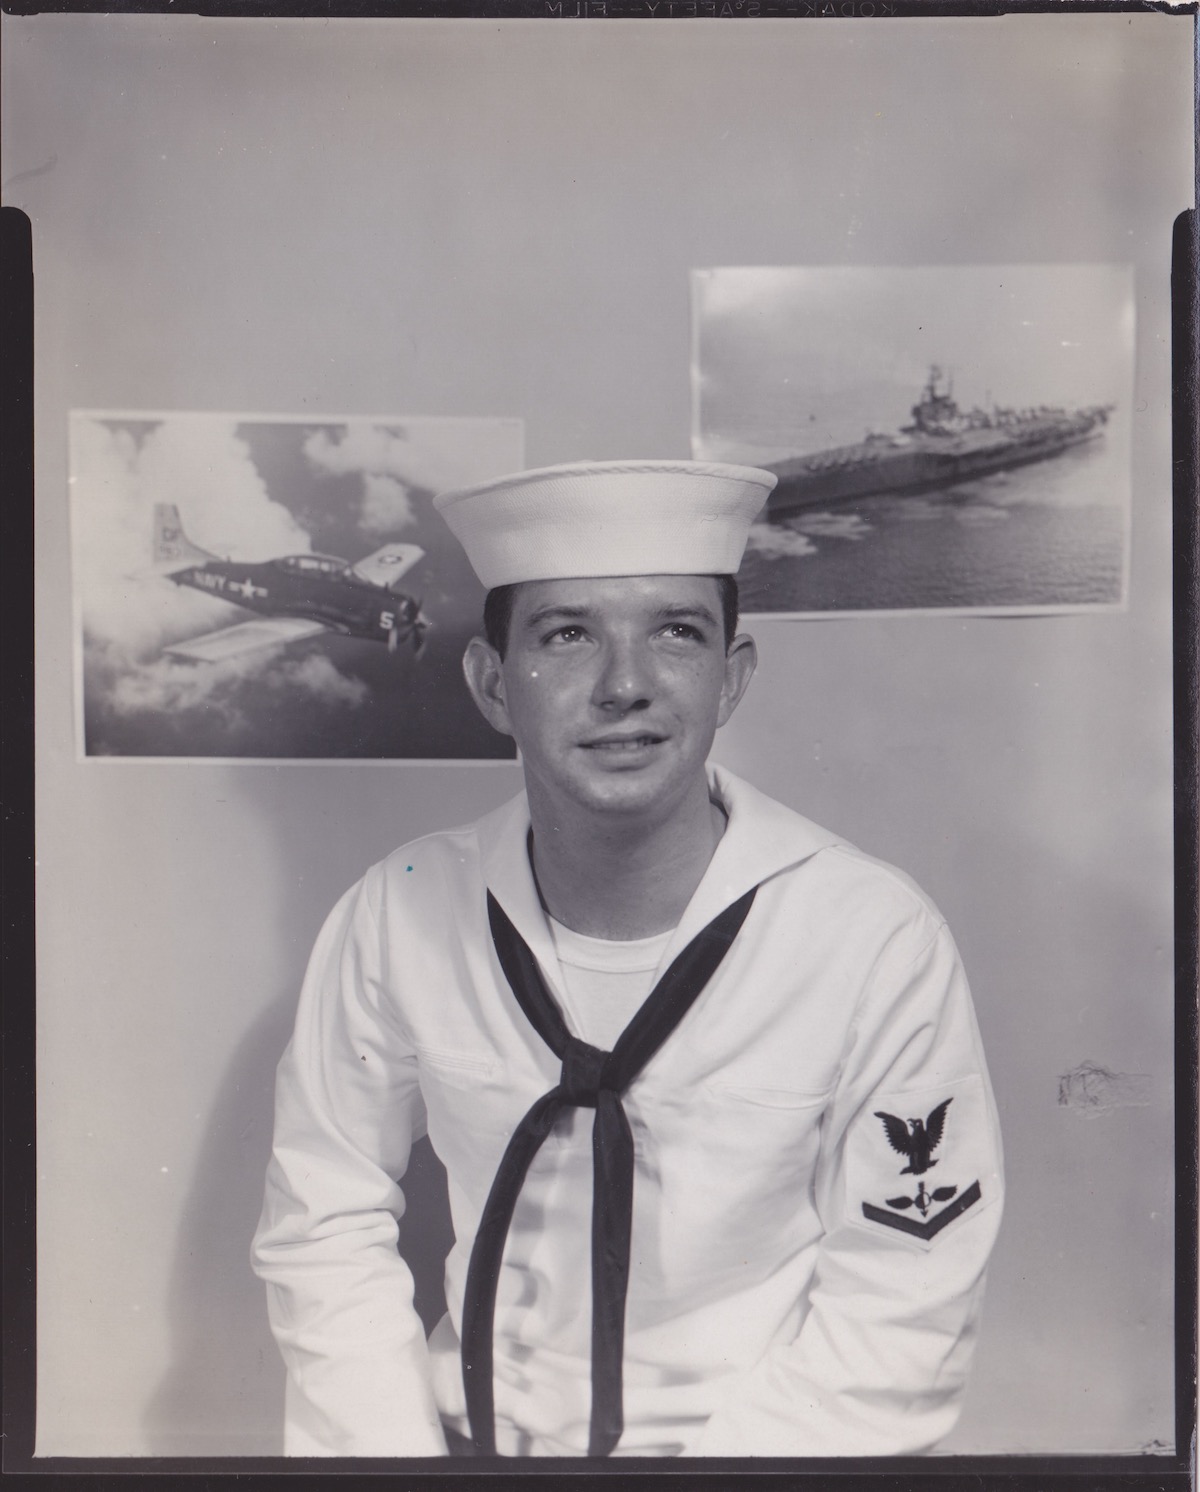 Don Quaintance posing in his Navy uniform, 1964. Photo courtesy of Don Quaintance. 